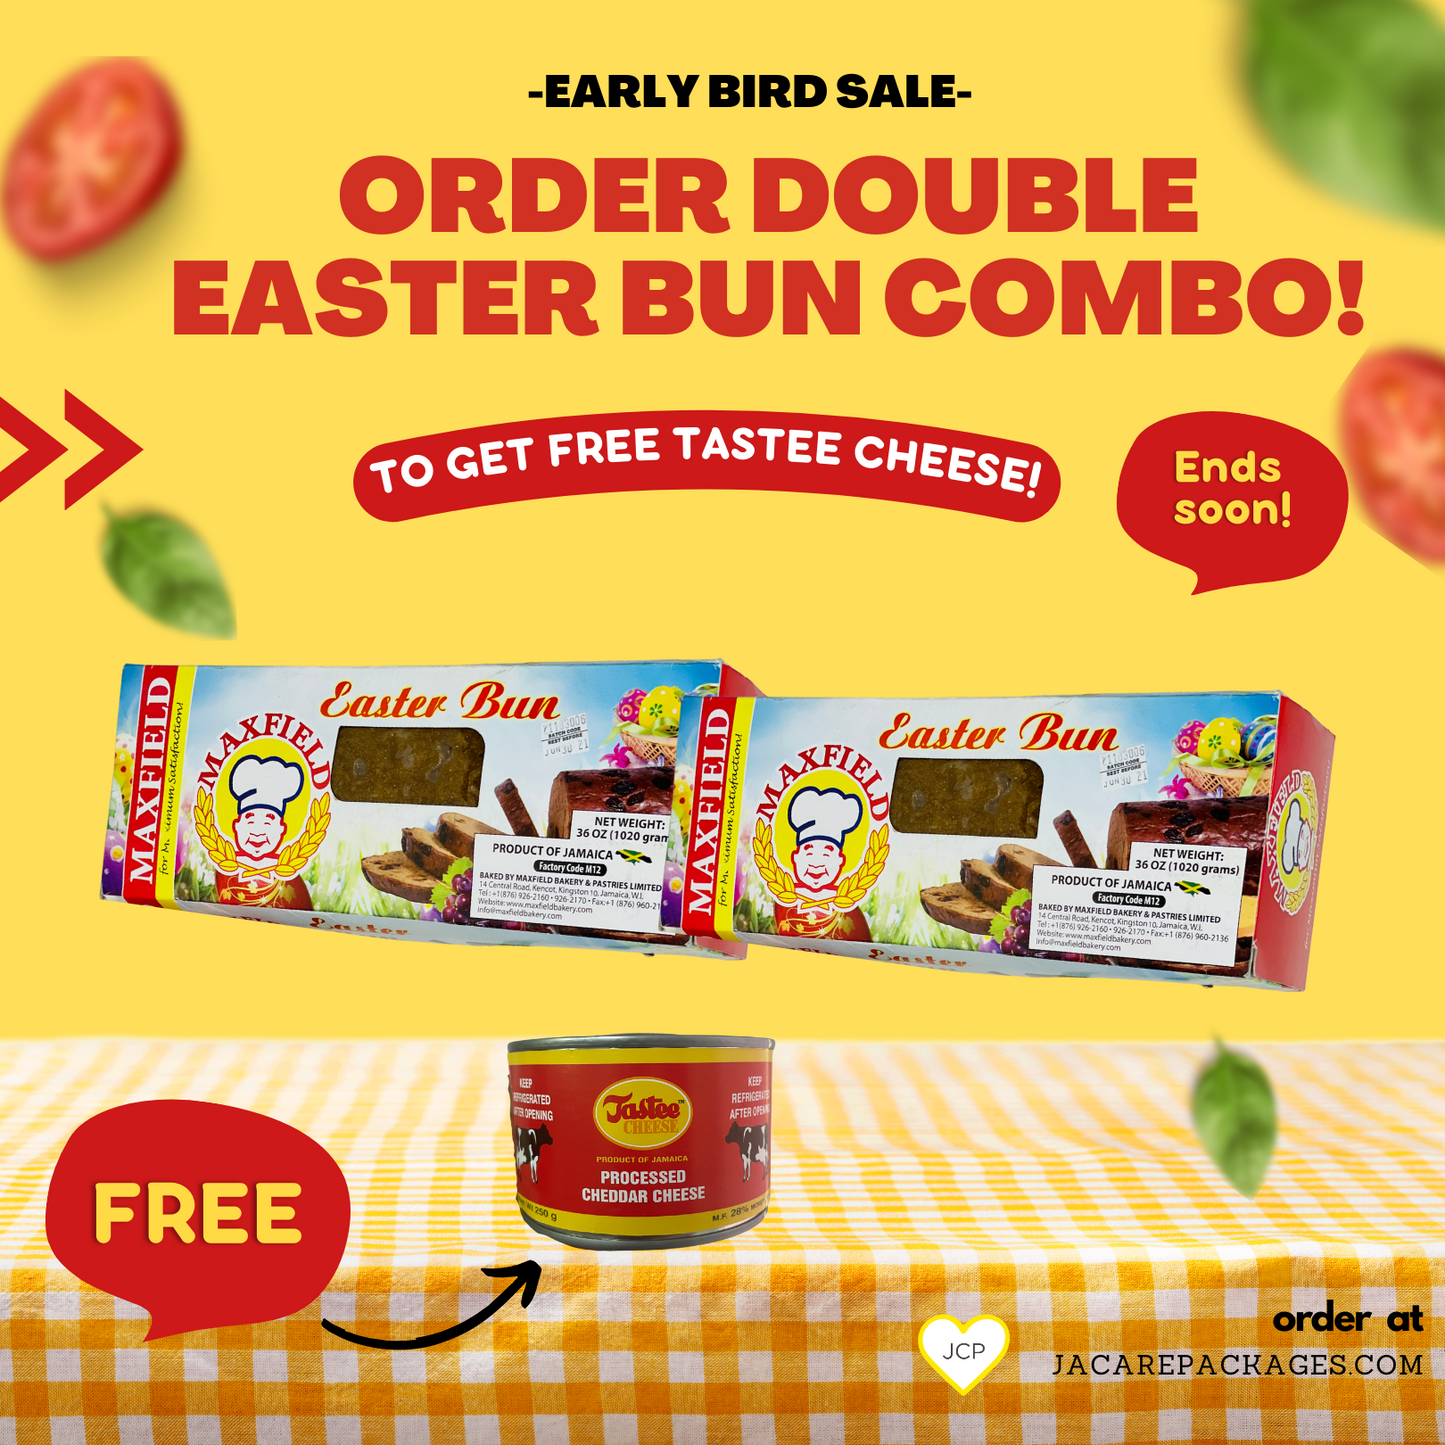 Double Easter Bun + Free Tastee Cheese Combo